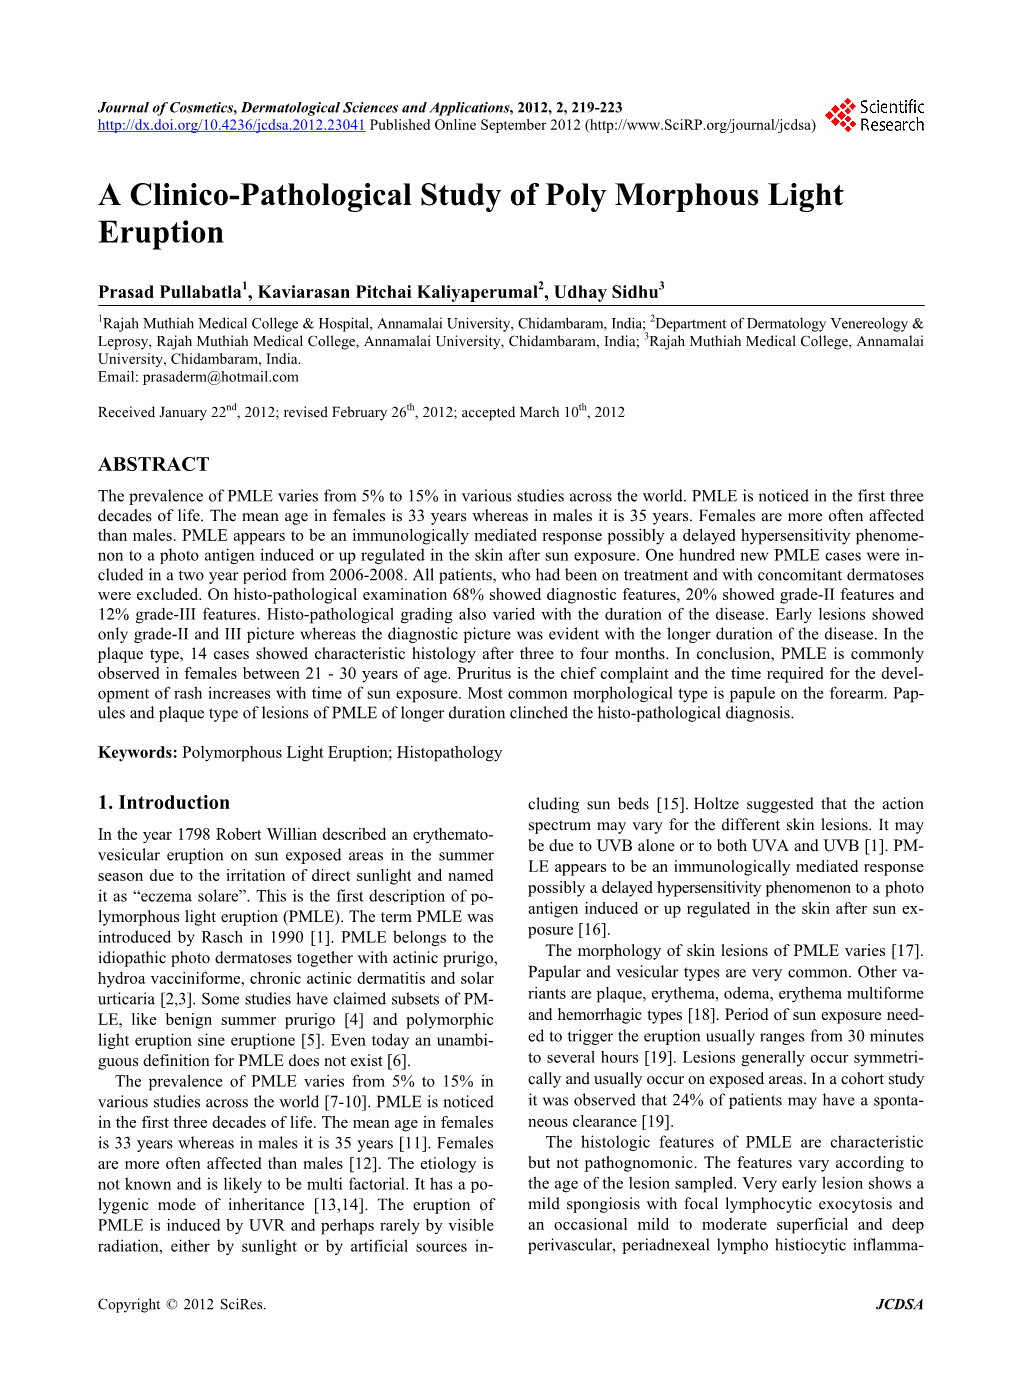 A Clinico-Pathological Study of Poly Morphous Light Eruption